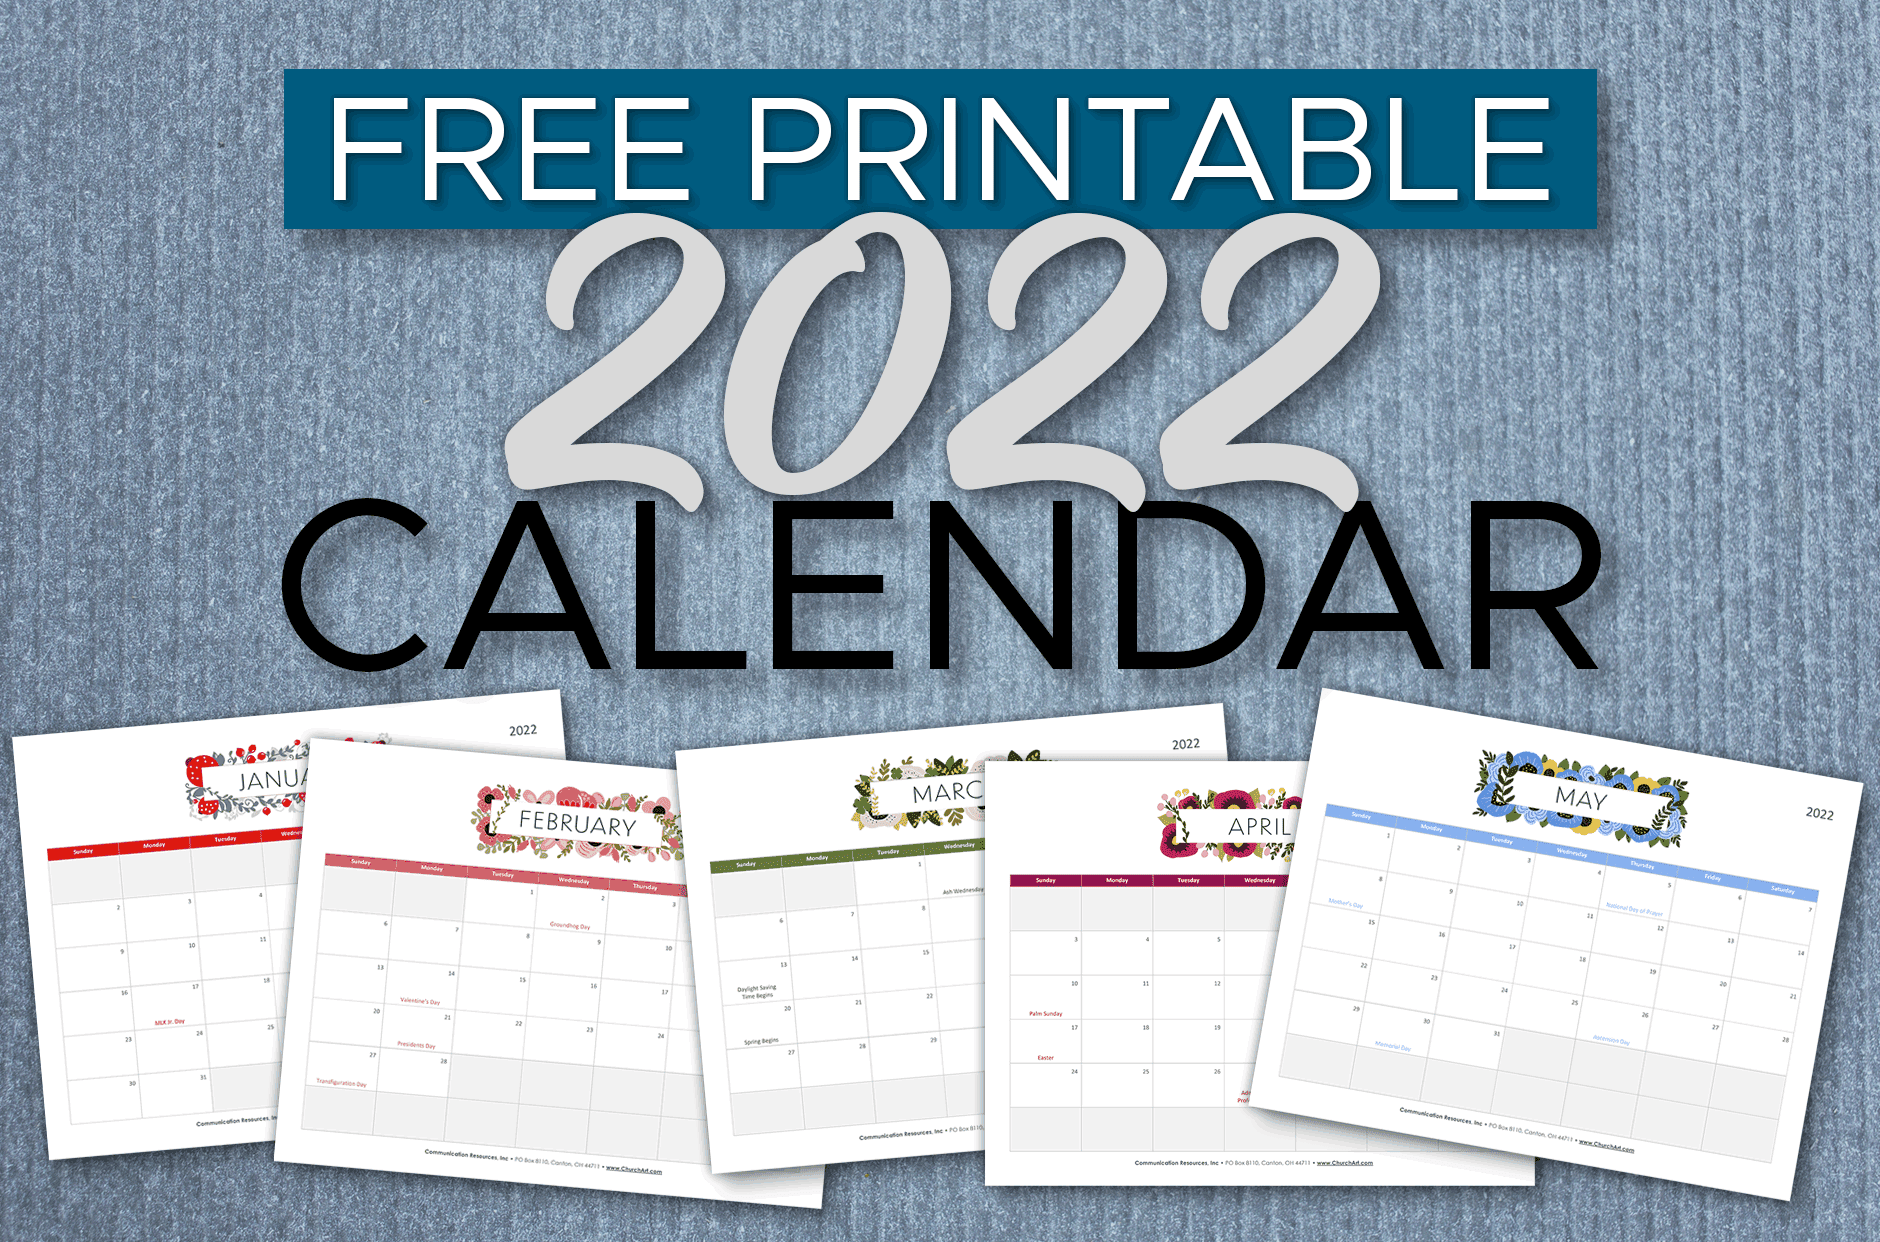 Free Printable 2022 Church Calendar | Churchart.cOm Blog